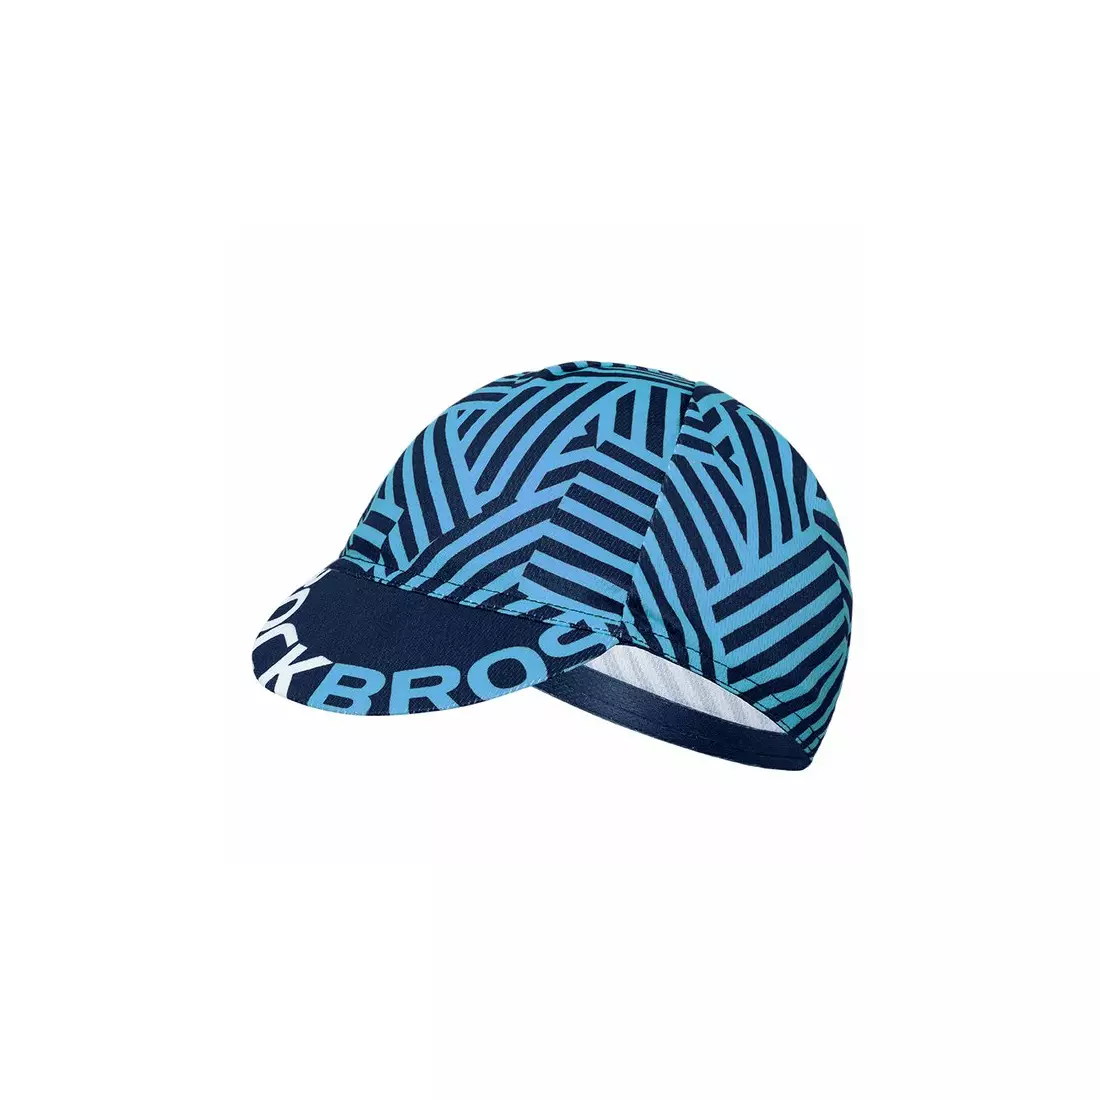 Rockbros cycling cap, blue MZ10018